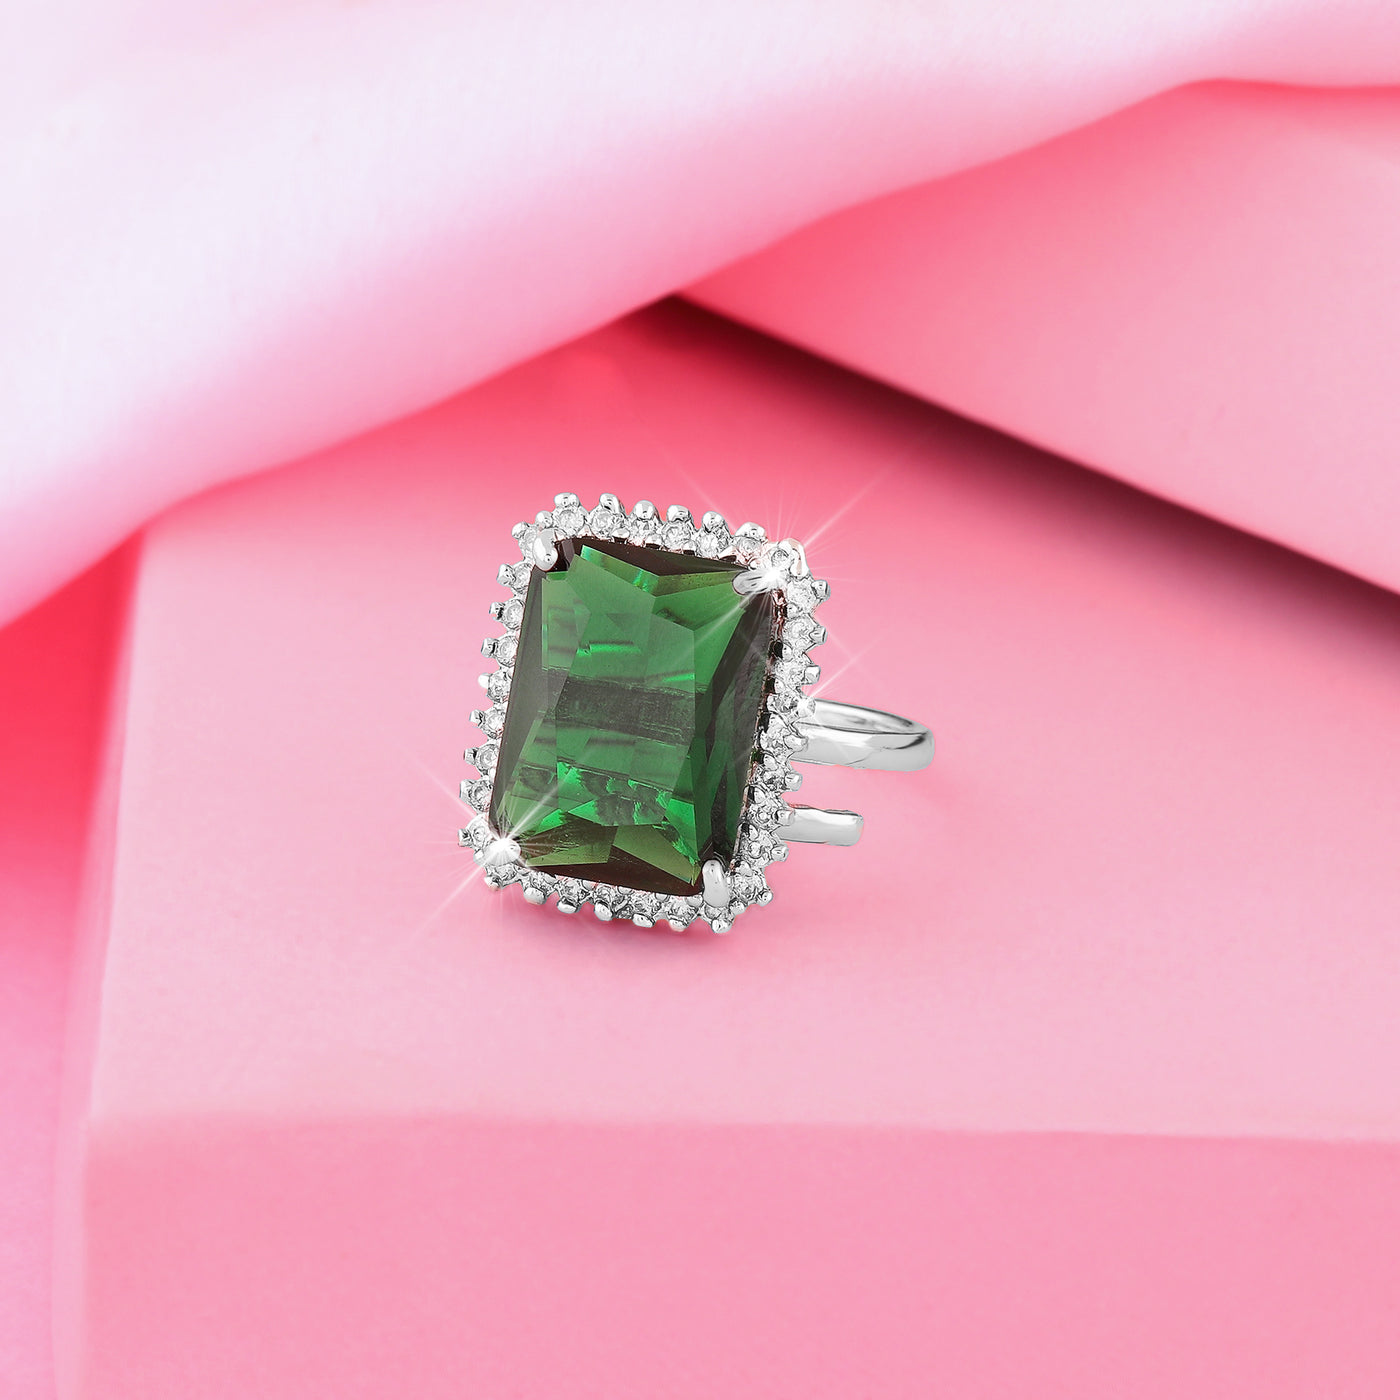 Estele Rhodium Plated CZ Adjustable Emerald/ Green Finger Ring for Women